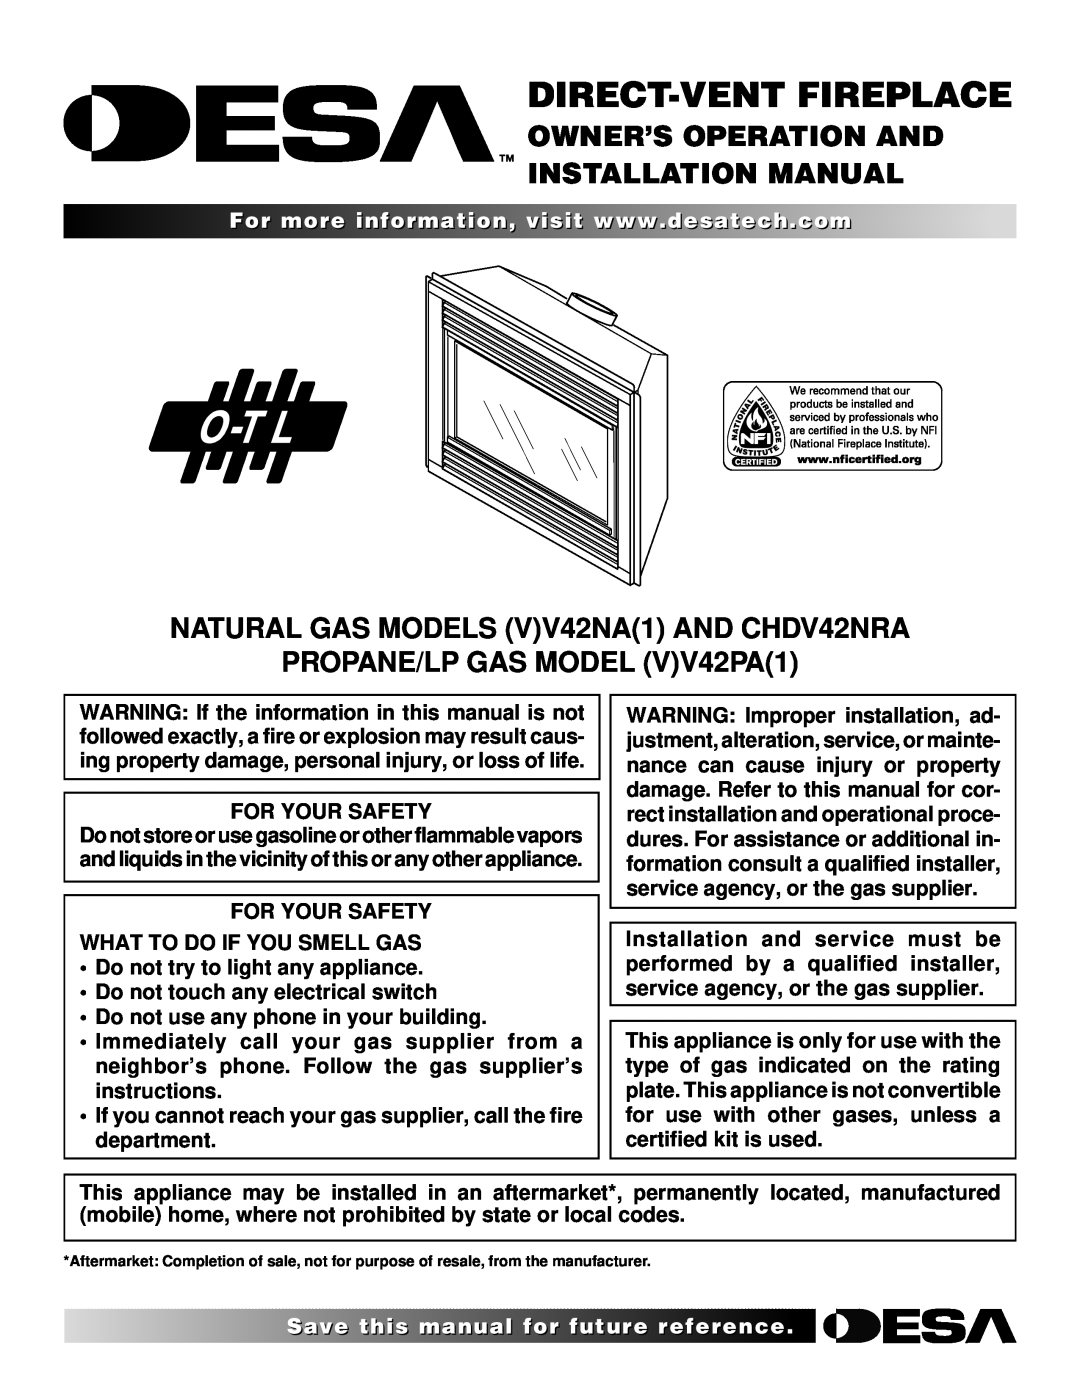 Desa installation manual Owner’S Operation And Installation Manual, NATURAL GAS MODELS VV42NA1 AND CHDV42NRA 